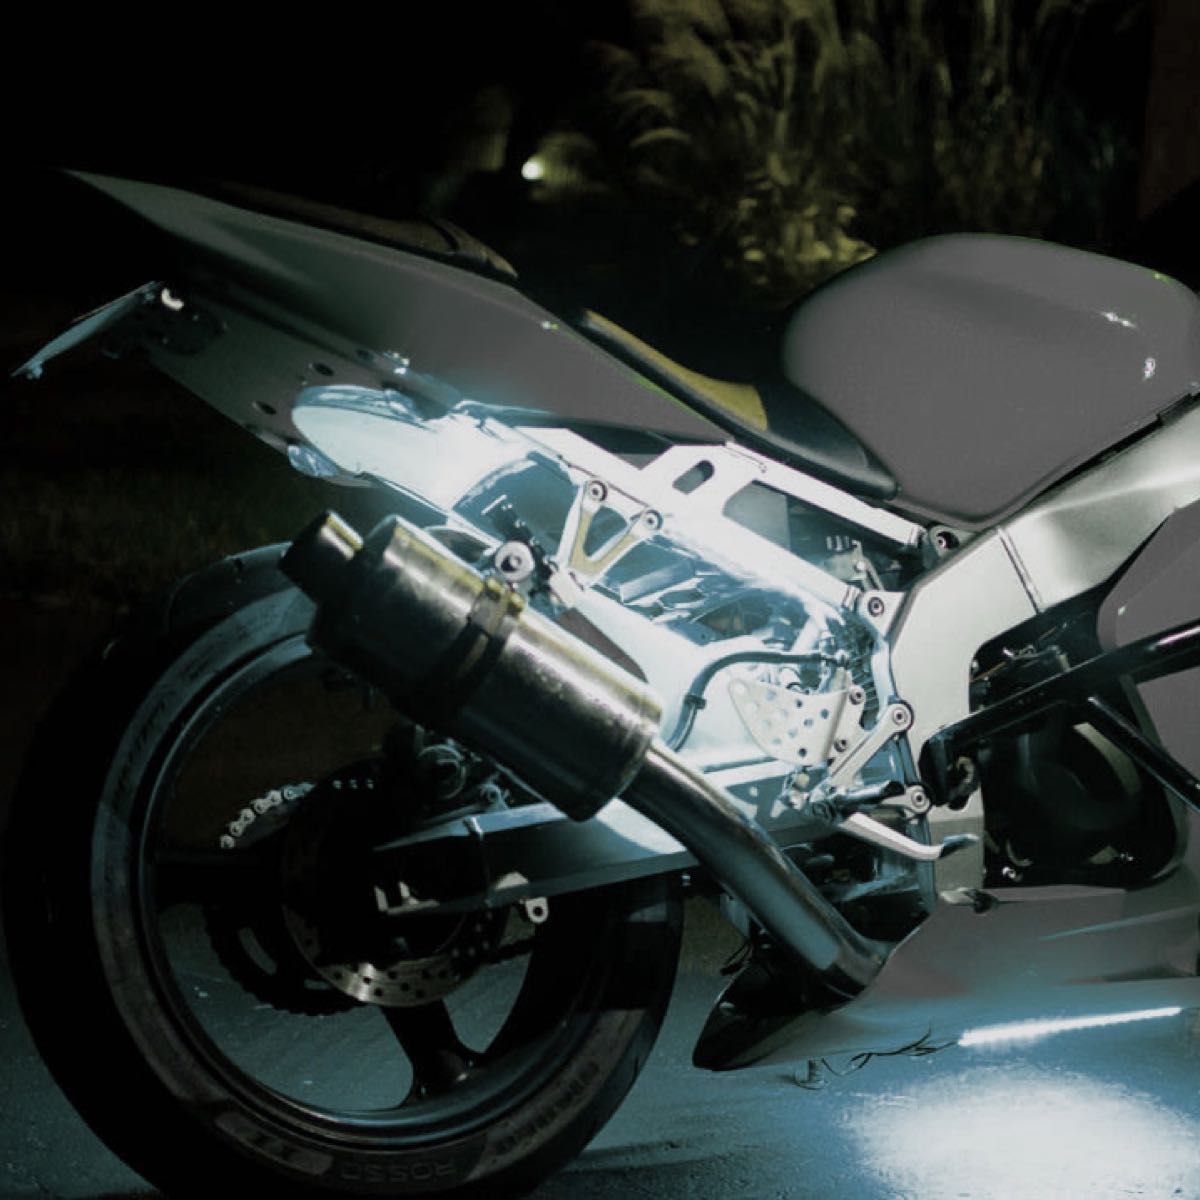 LEDテープ ホワイト 300連 黒ベース 専用コネクター付 5m 防水 12V テープライト 白 車 自動車 バイク オートバイ